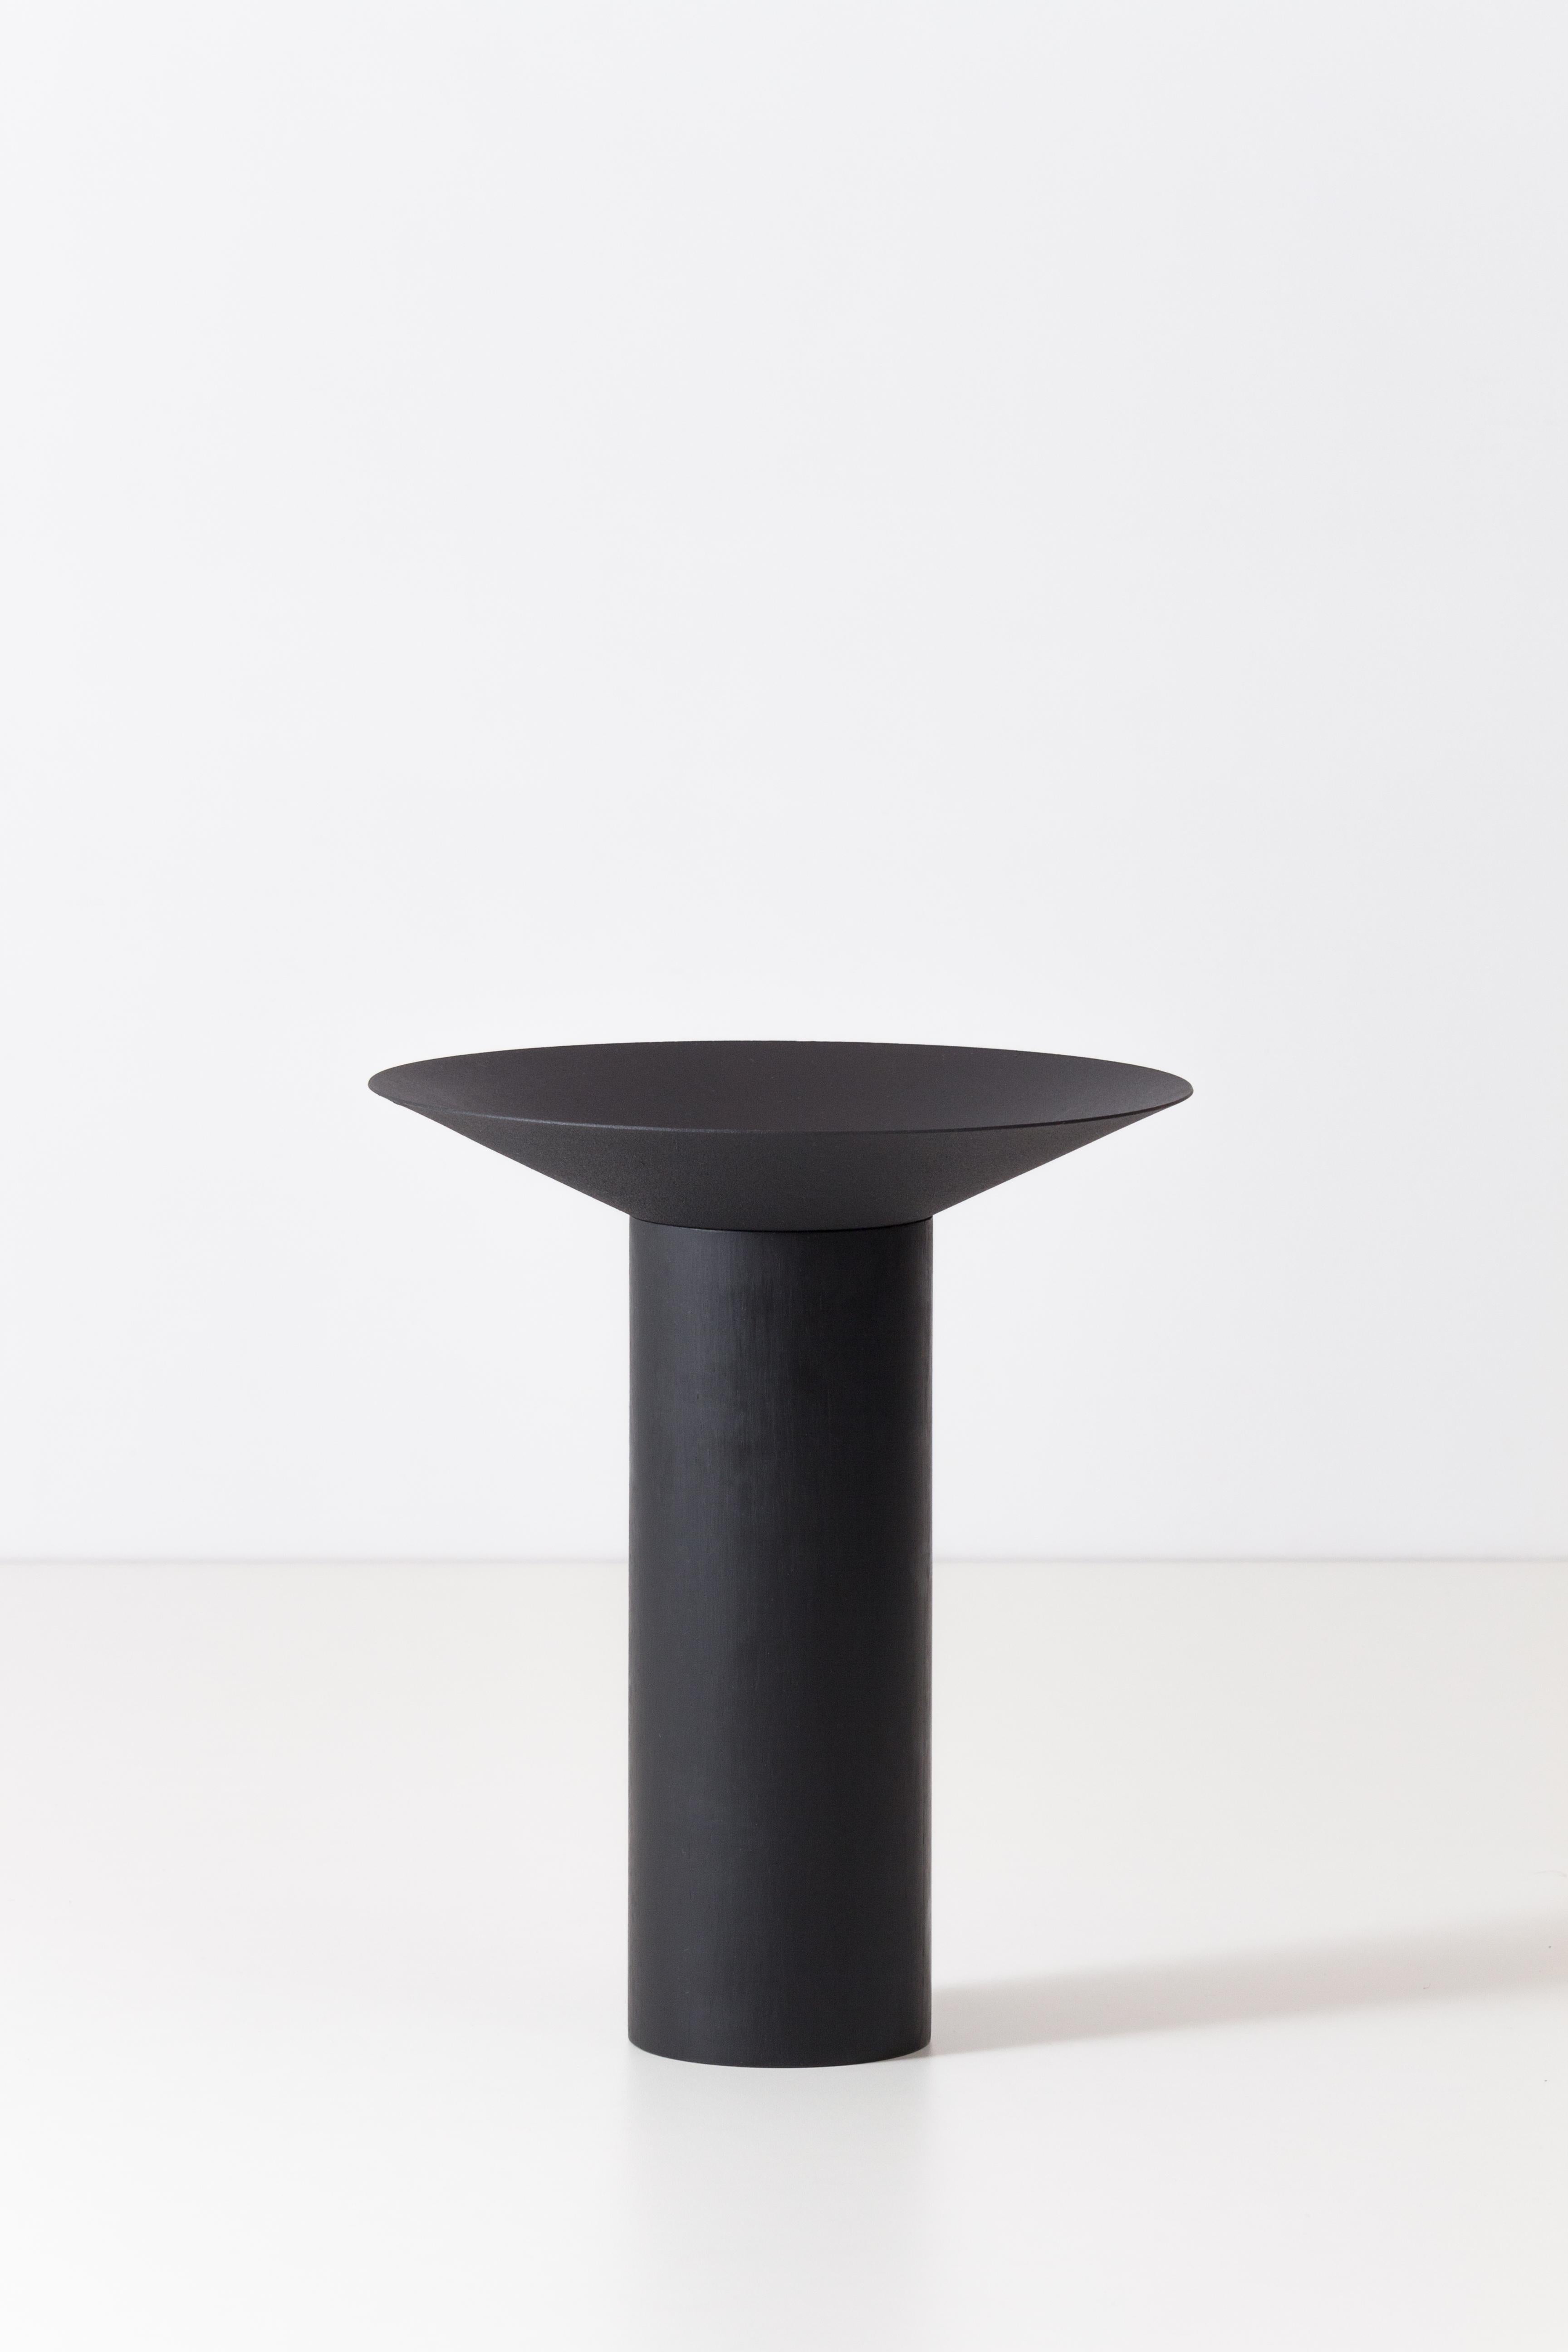 Dossel Collection (Set of 5) by Estúdio Dentro, Brazilian Contemporary Design For Sale 8